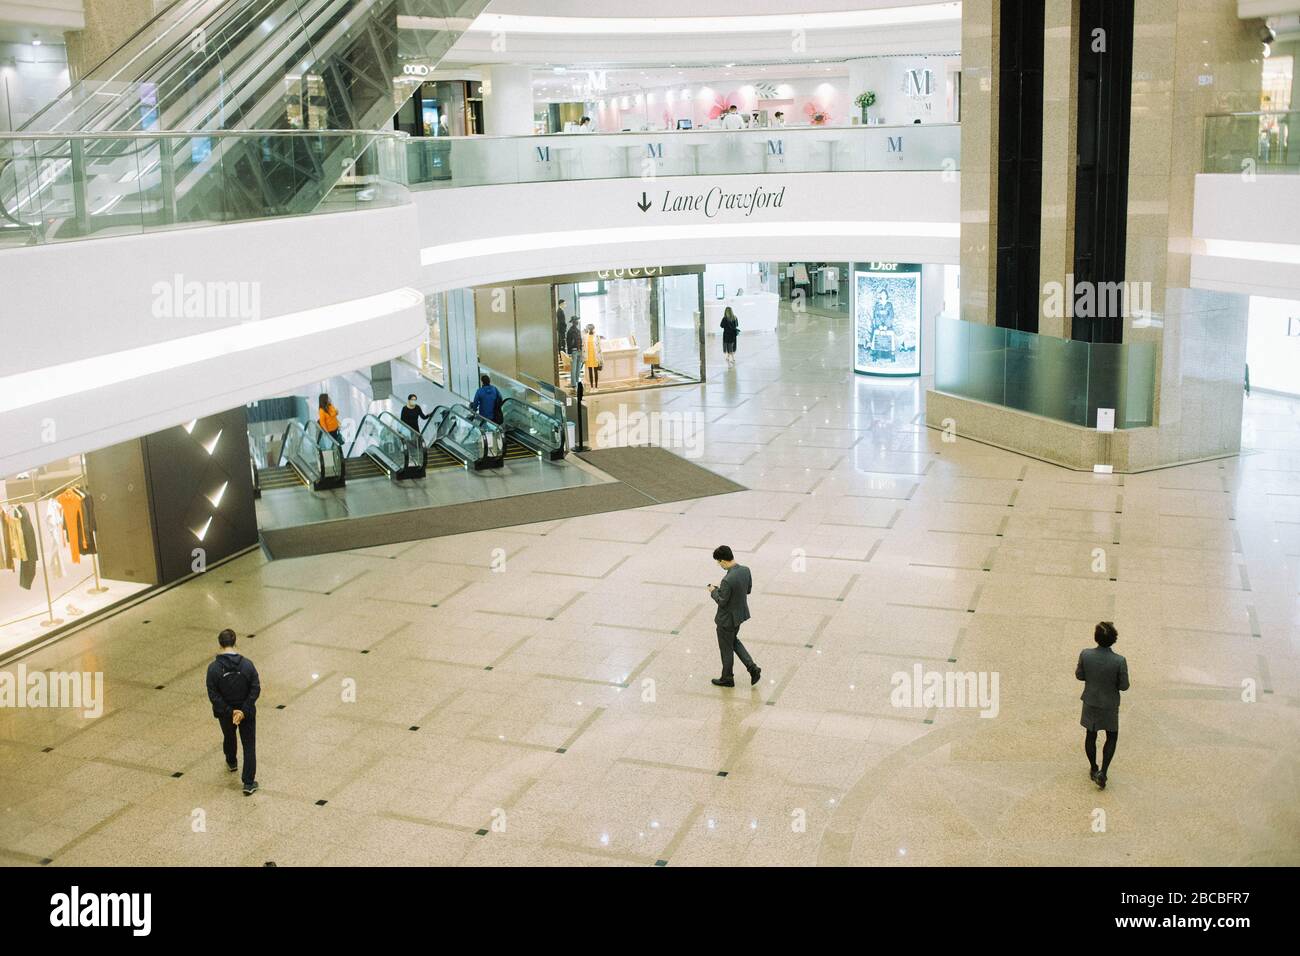 Hong Kong, 04 April 2020 - Empty shopping mall of Times square in Hong Kong due to the coronavirus. Stock Photo